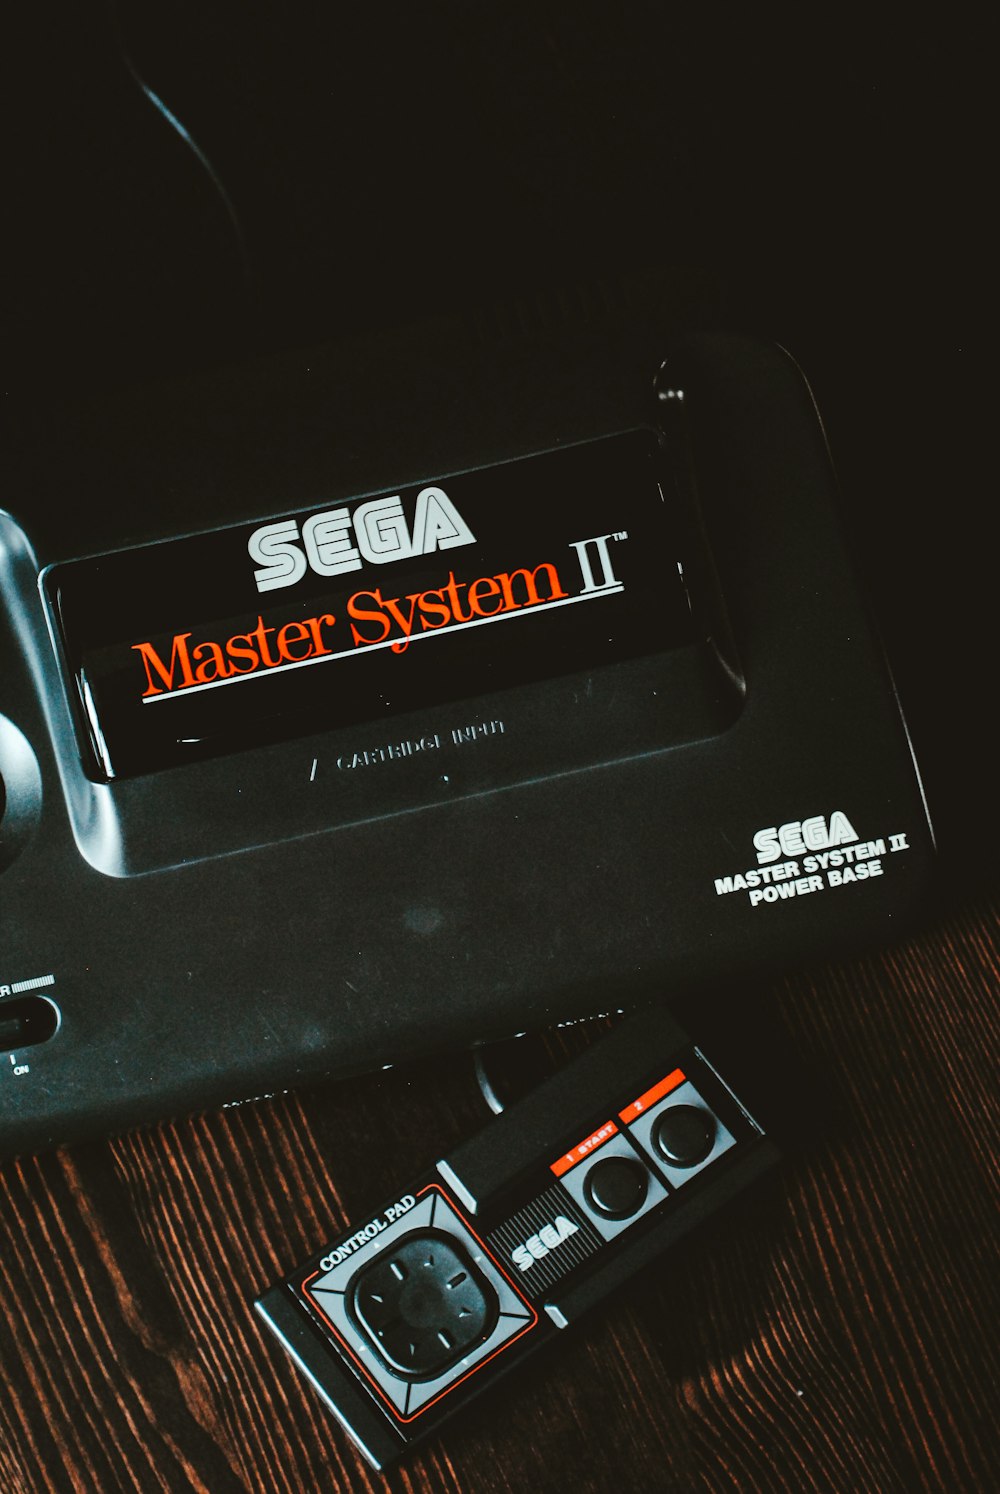 Dispositivo Sega Master System II negro sobre superficie de madera marrón